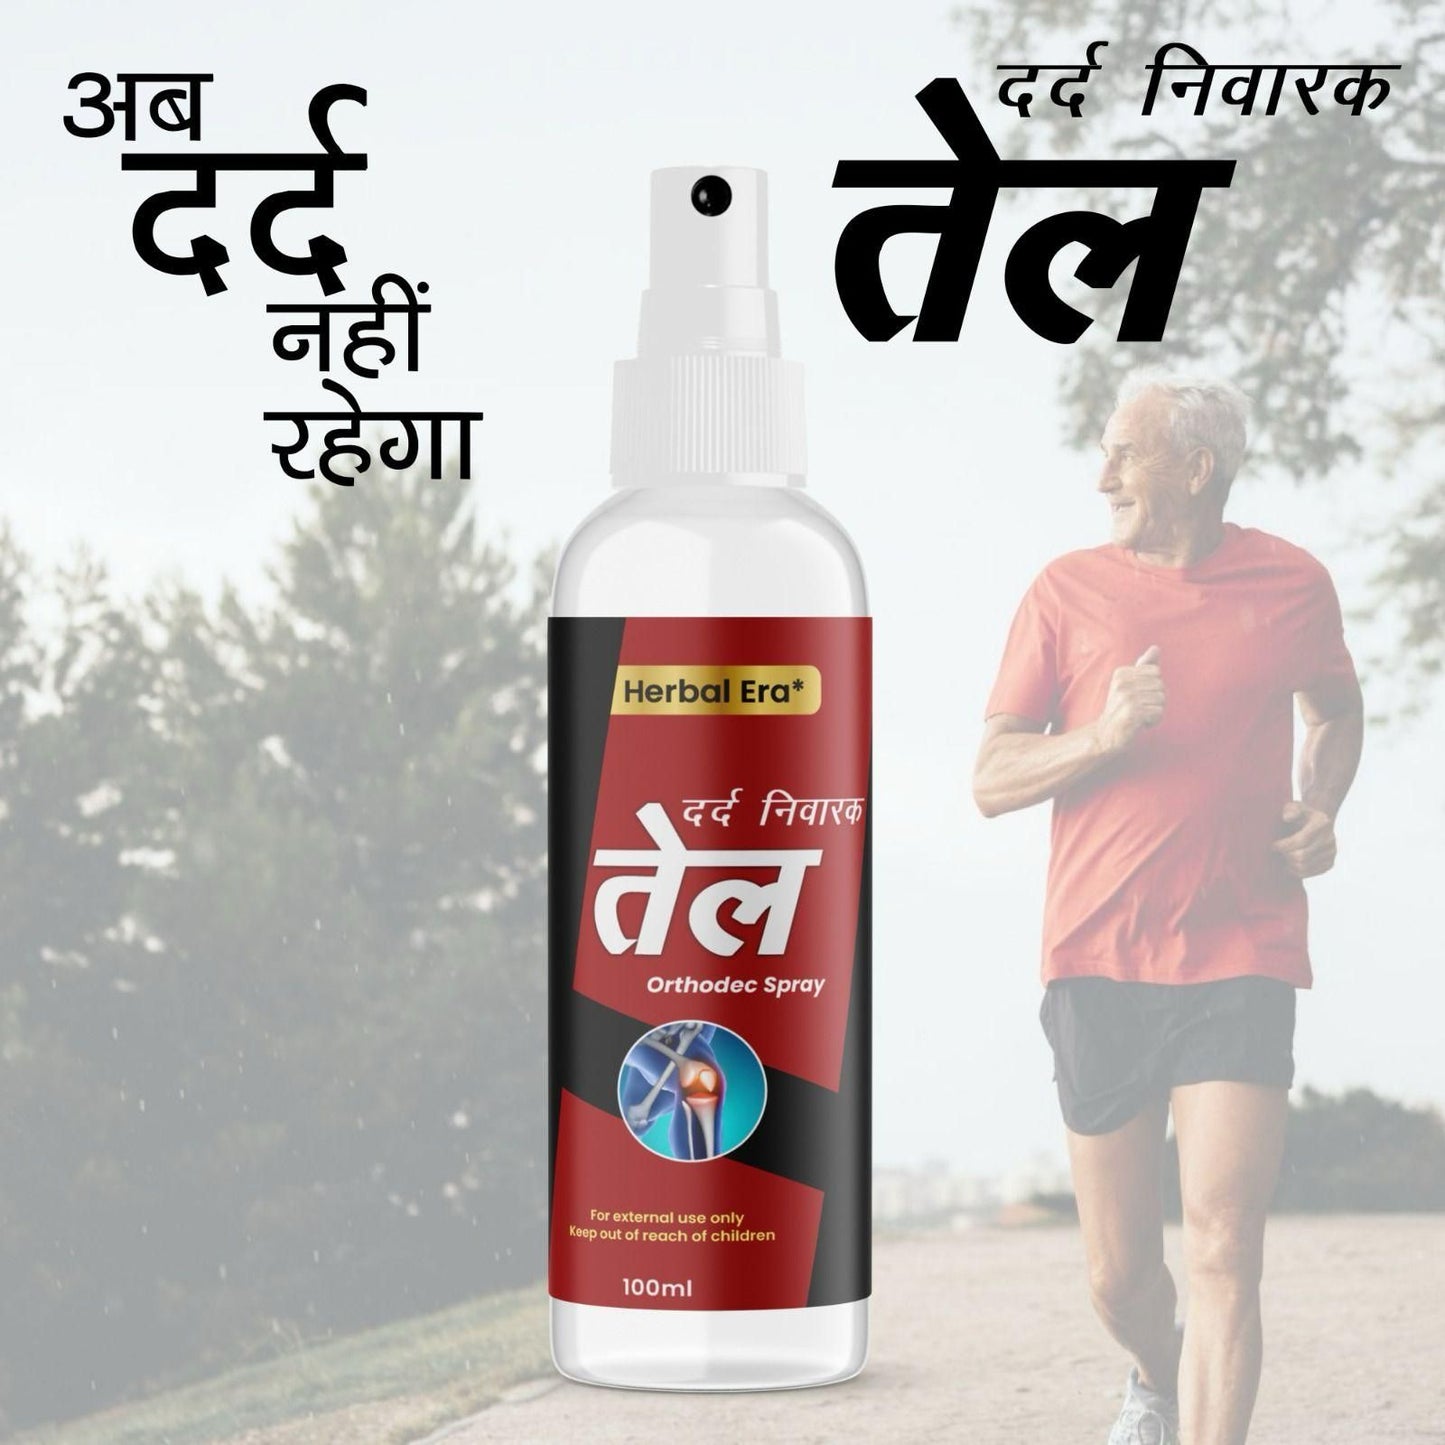 Herbal Era Dard Nivarak Spray Tel 100ml - Natural Pain Relief Formula (Pack of 2) - Gymom Wellness Warehouse 